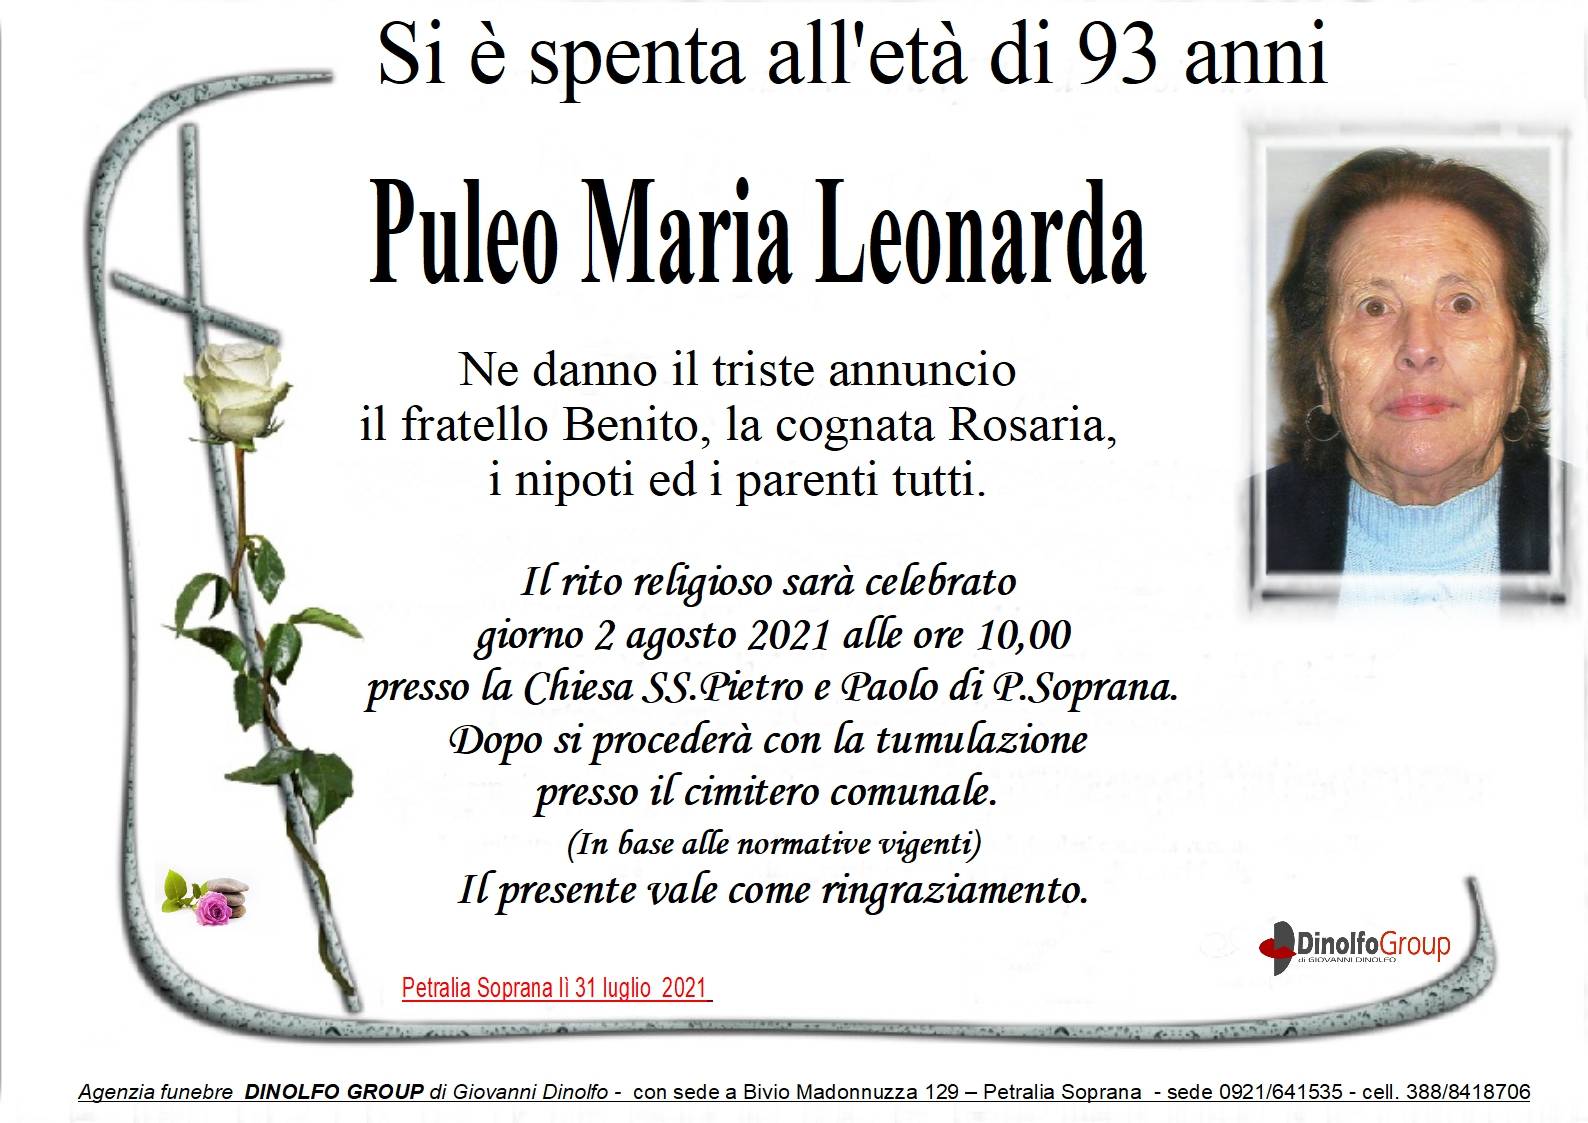 Maria Leonarda Puleo